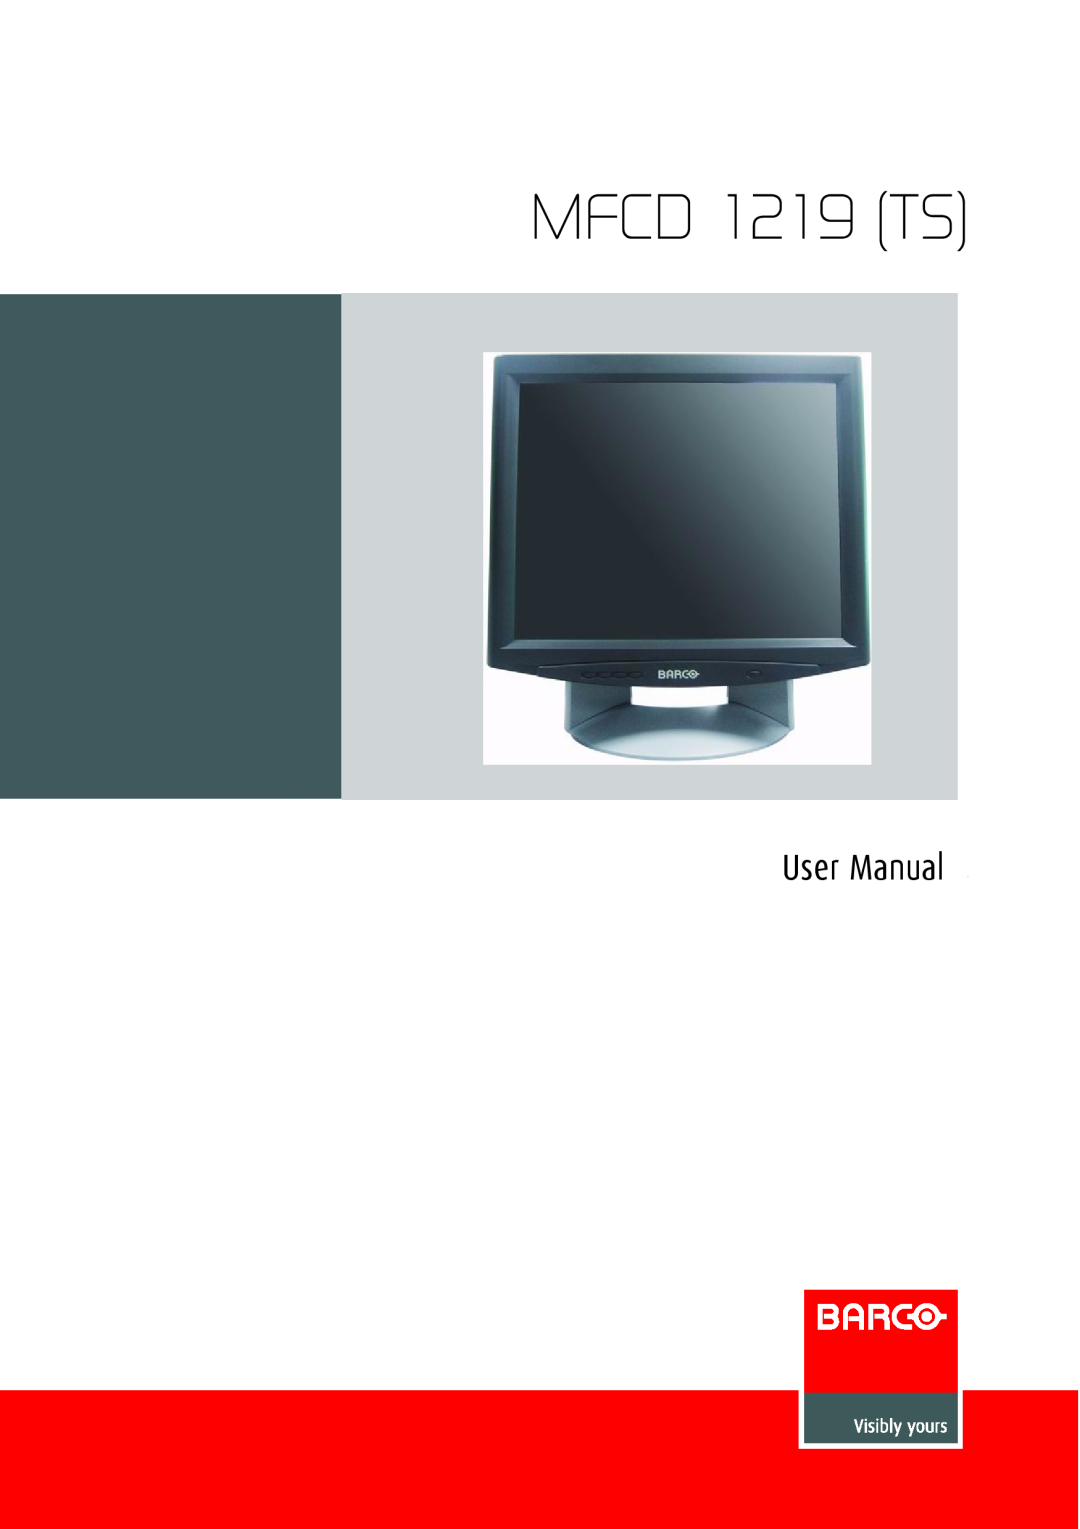 Barco user manual MFCD 1219 TS 